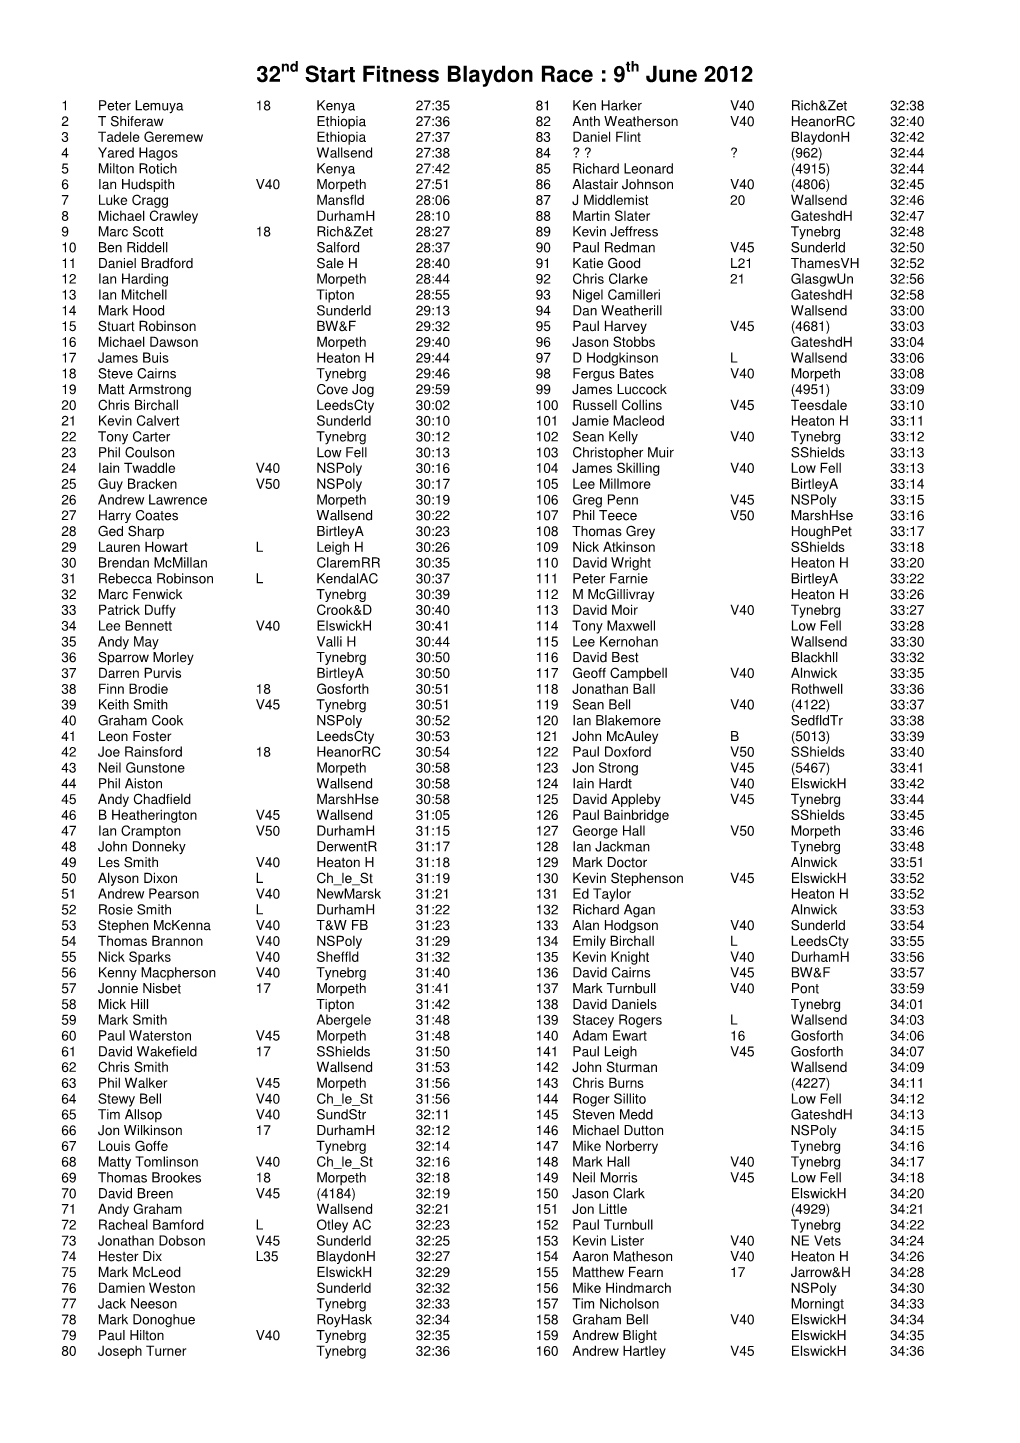 The Blaydon Race 2012 Results